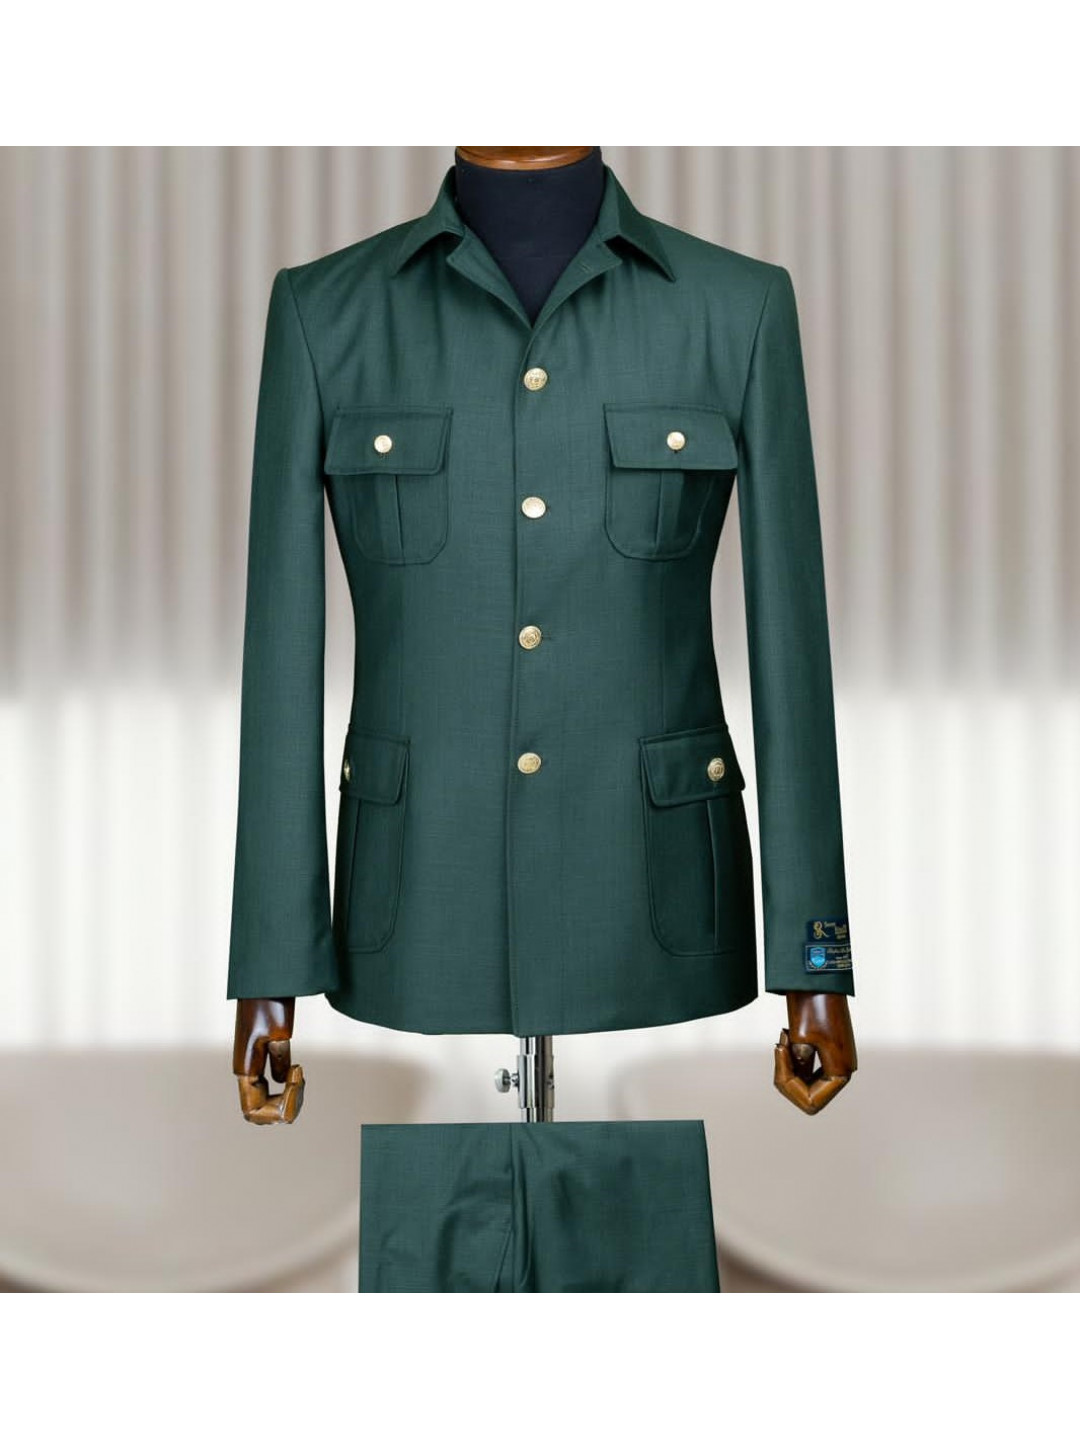 Find Latest Men's Safari Suit | Dark green on Wholesale or Retail in ...